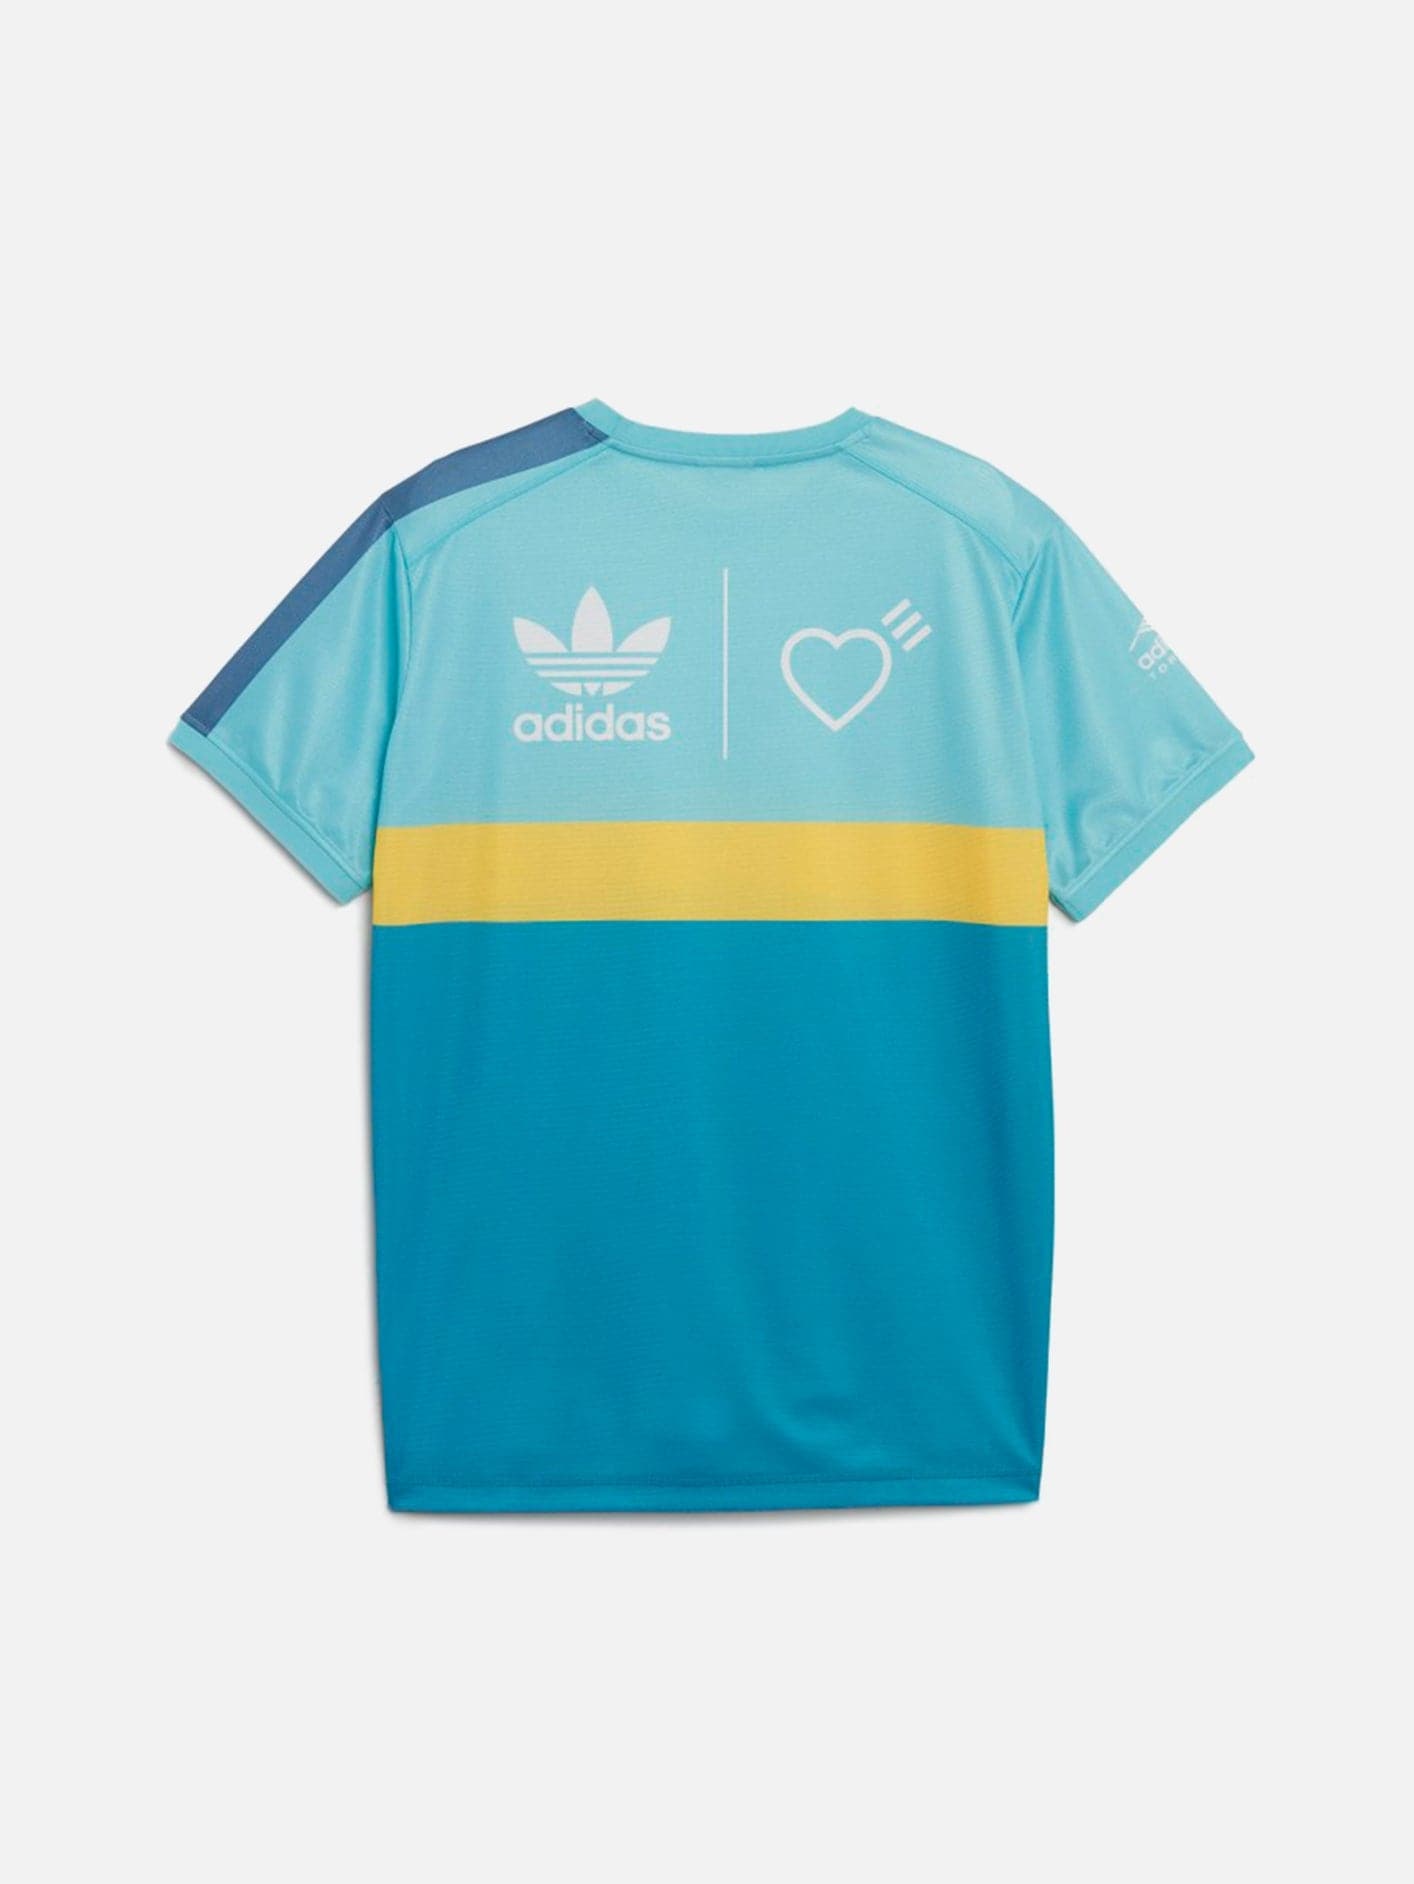 Adidas x Human Made Graphic T Shirt   T SHIRT shopi go